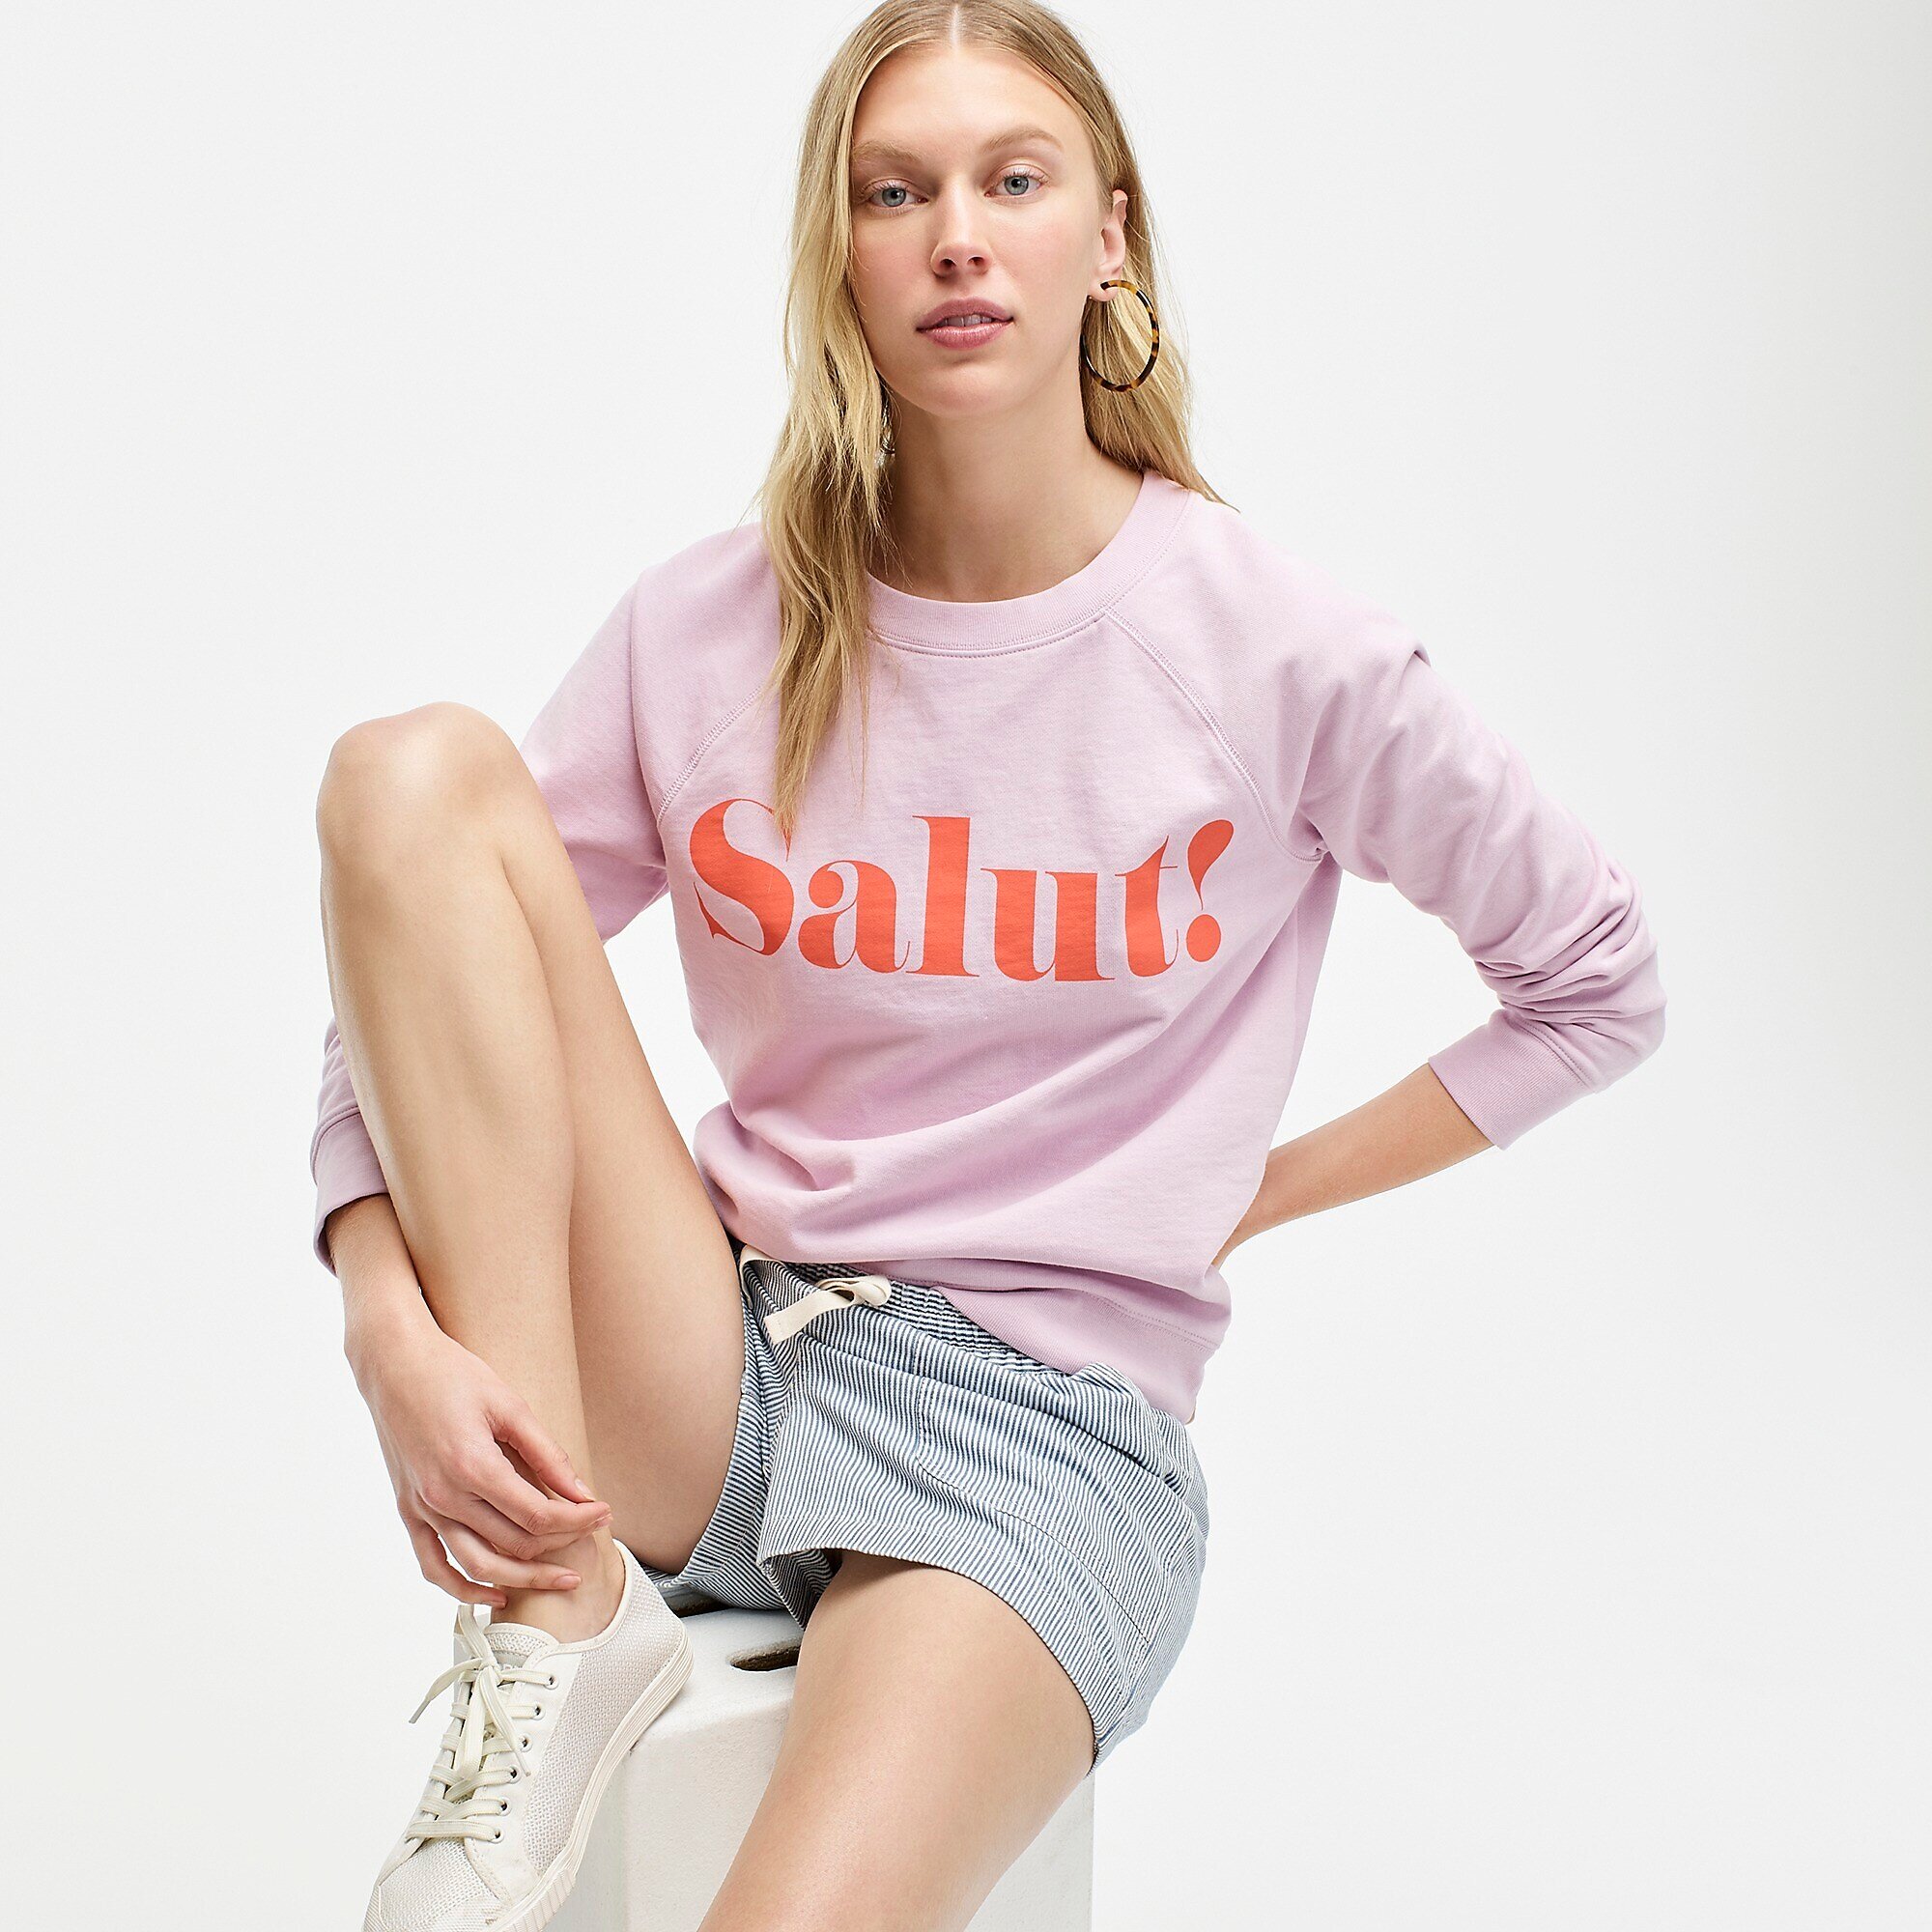 Camilla Atkins, CATKINS DESIGN for J. Crew, Summer Sault lavender screen printed sweatshirt.jpeg